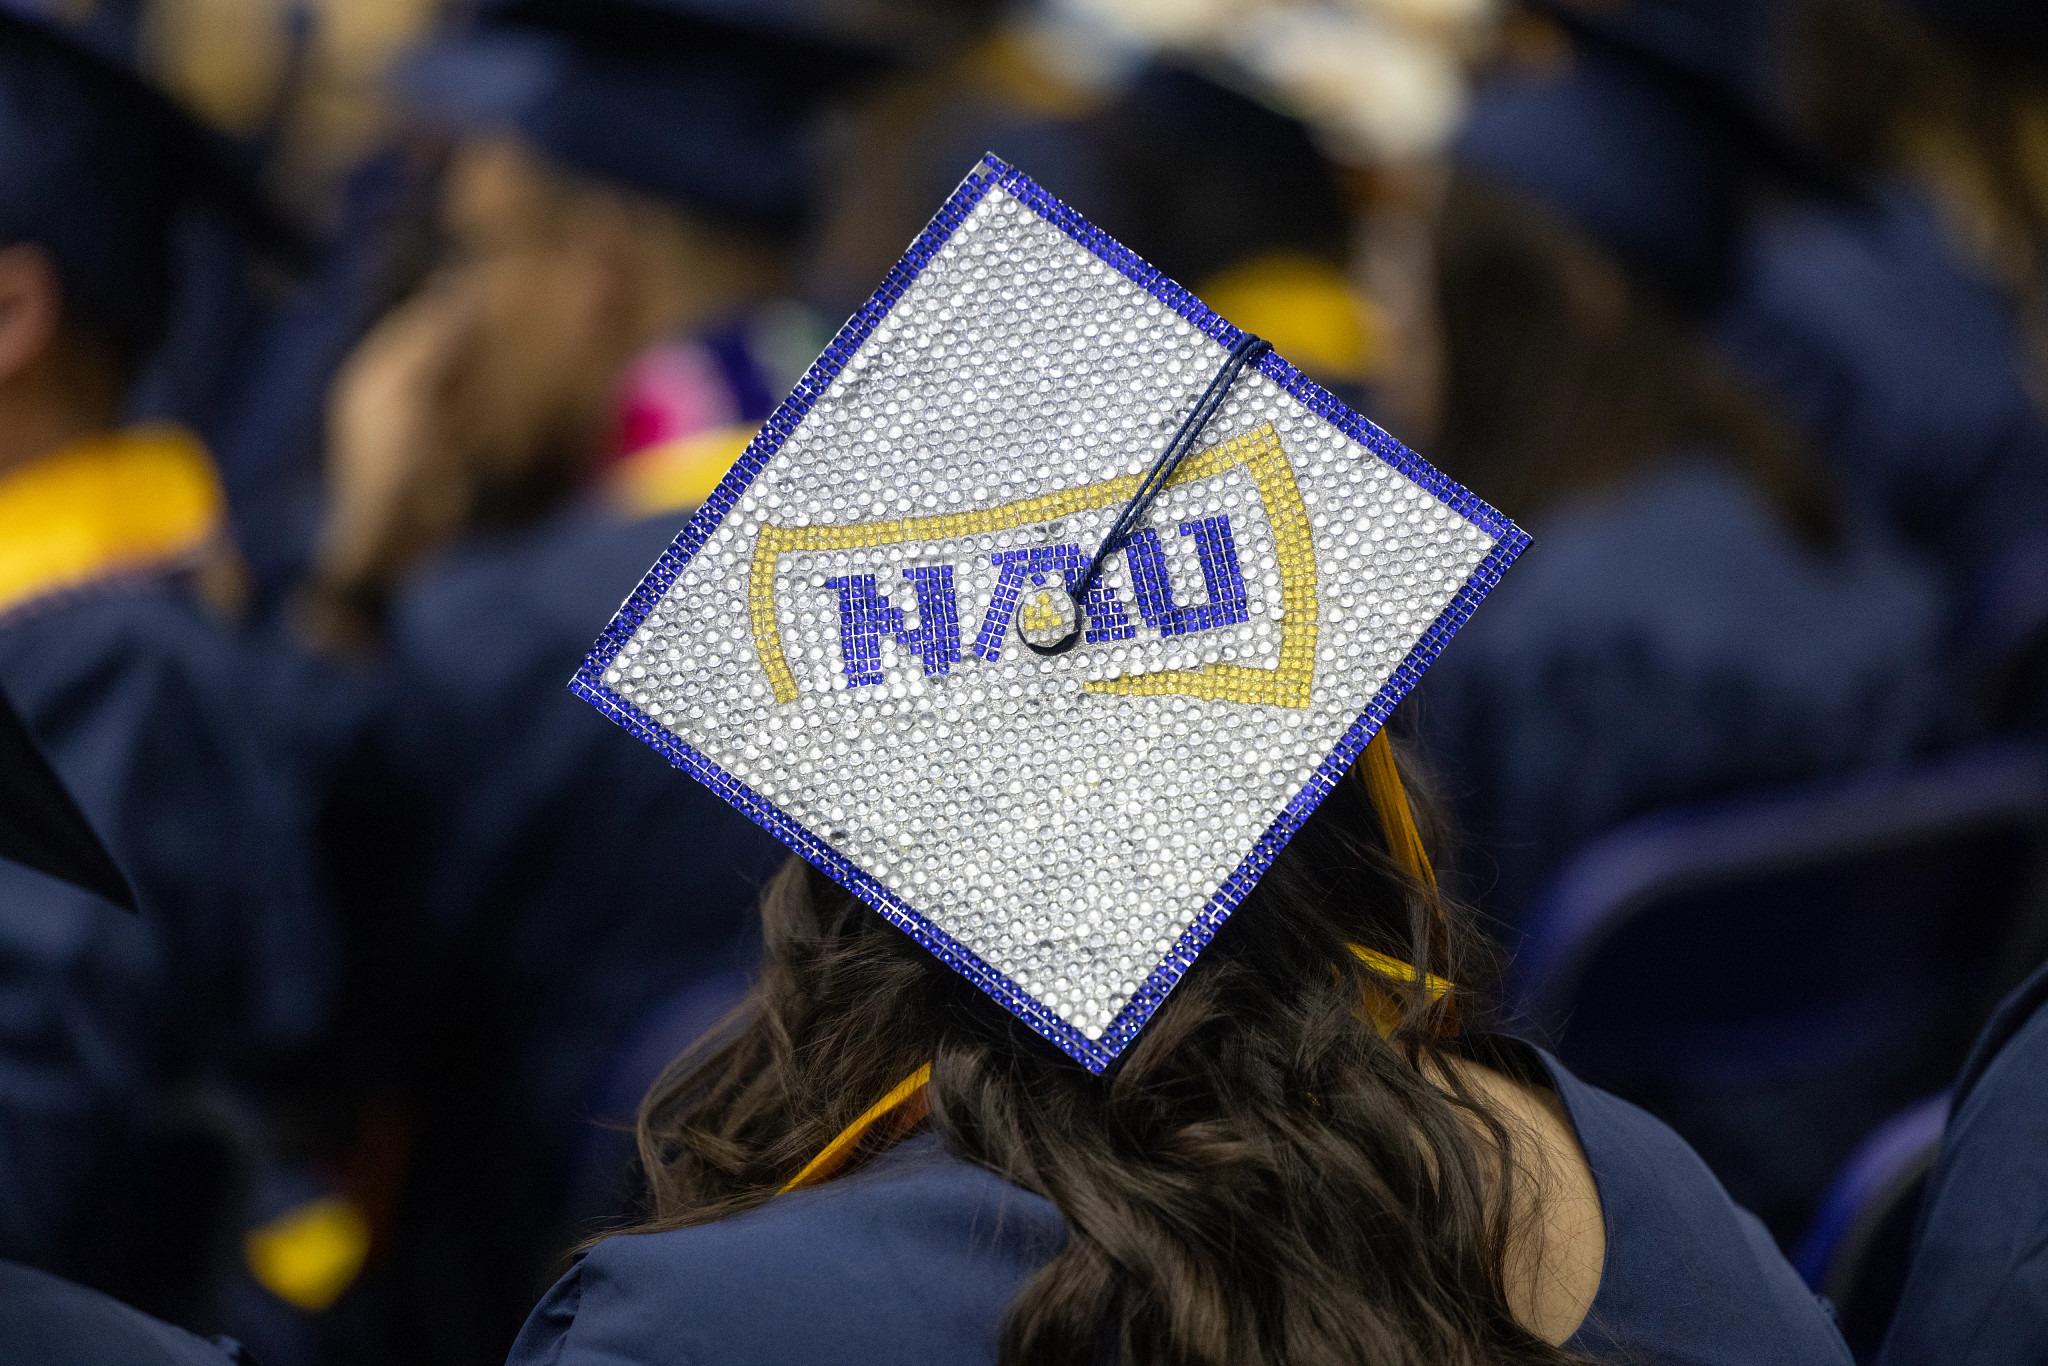 NAU graduation cap.